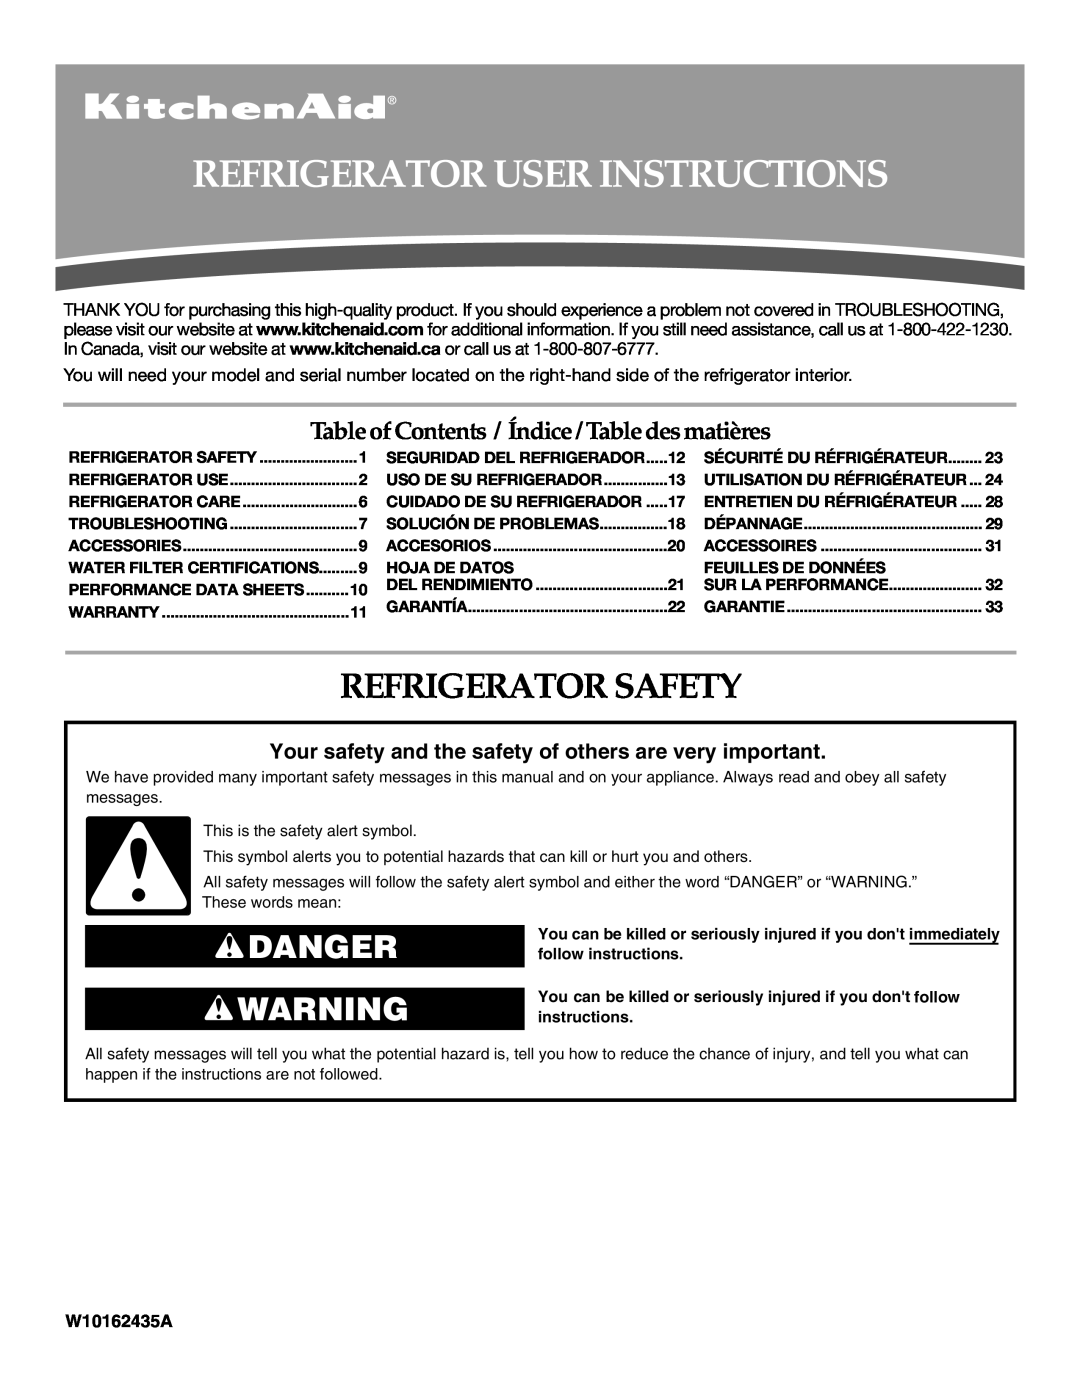 KitchenAid W10162435A warranty Refrigerator User Instructions, Refrigerator Safety, Danger 